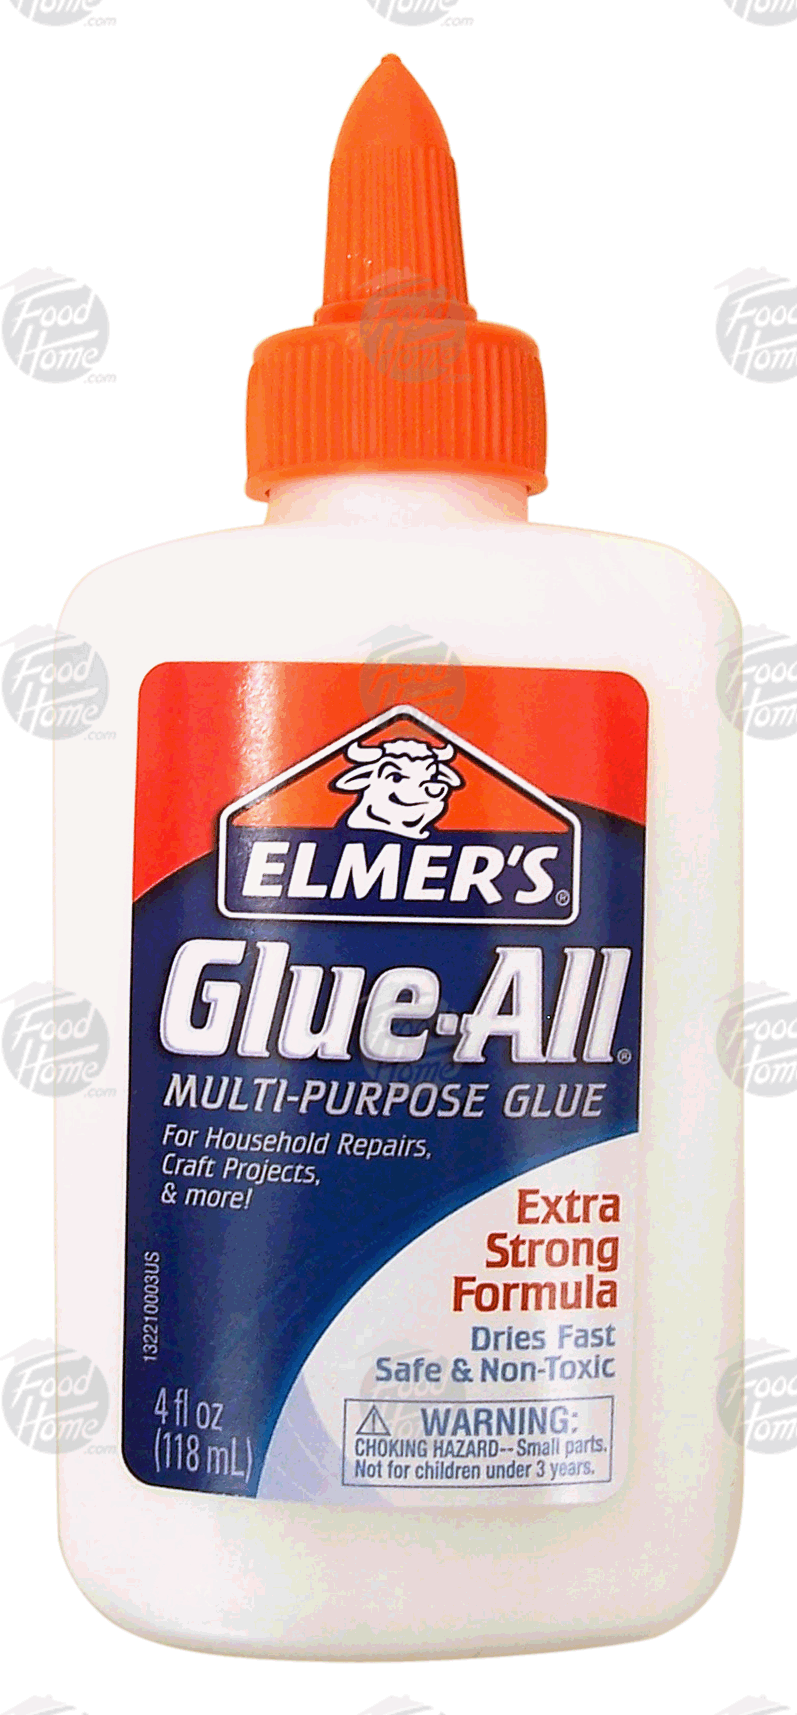 Elmer's Glue-All multi-purpose glue, extra strong formula, non-toxic Full-Size Picture